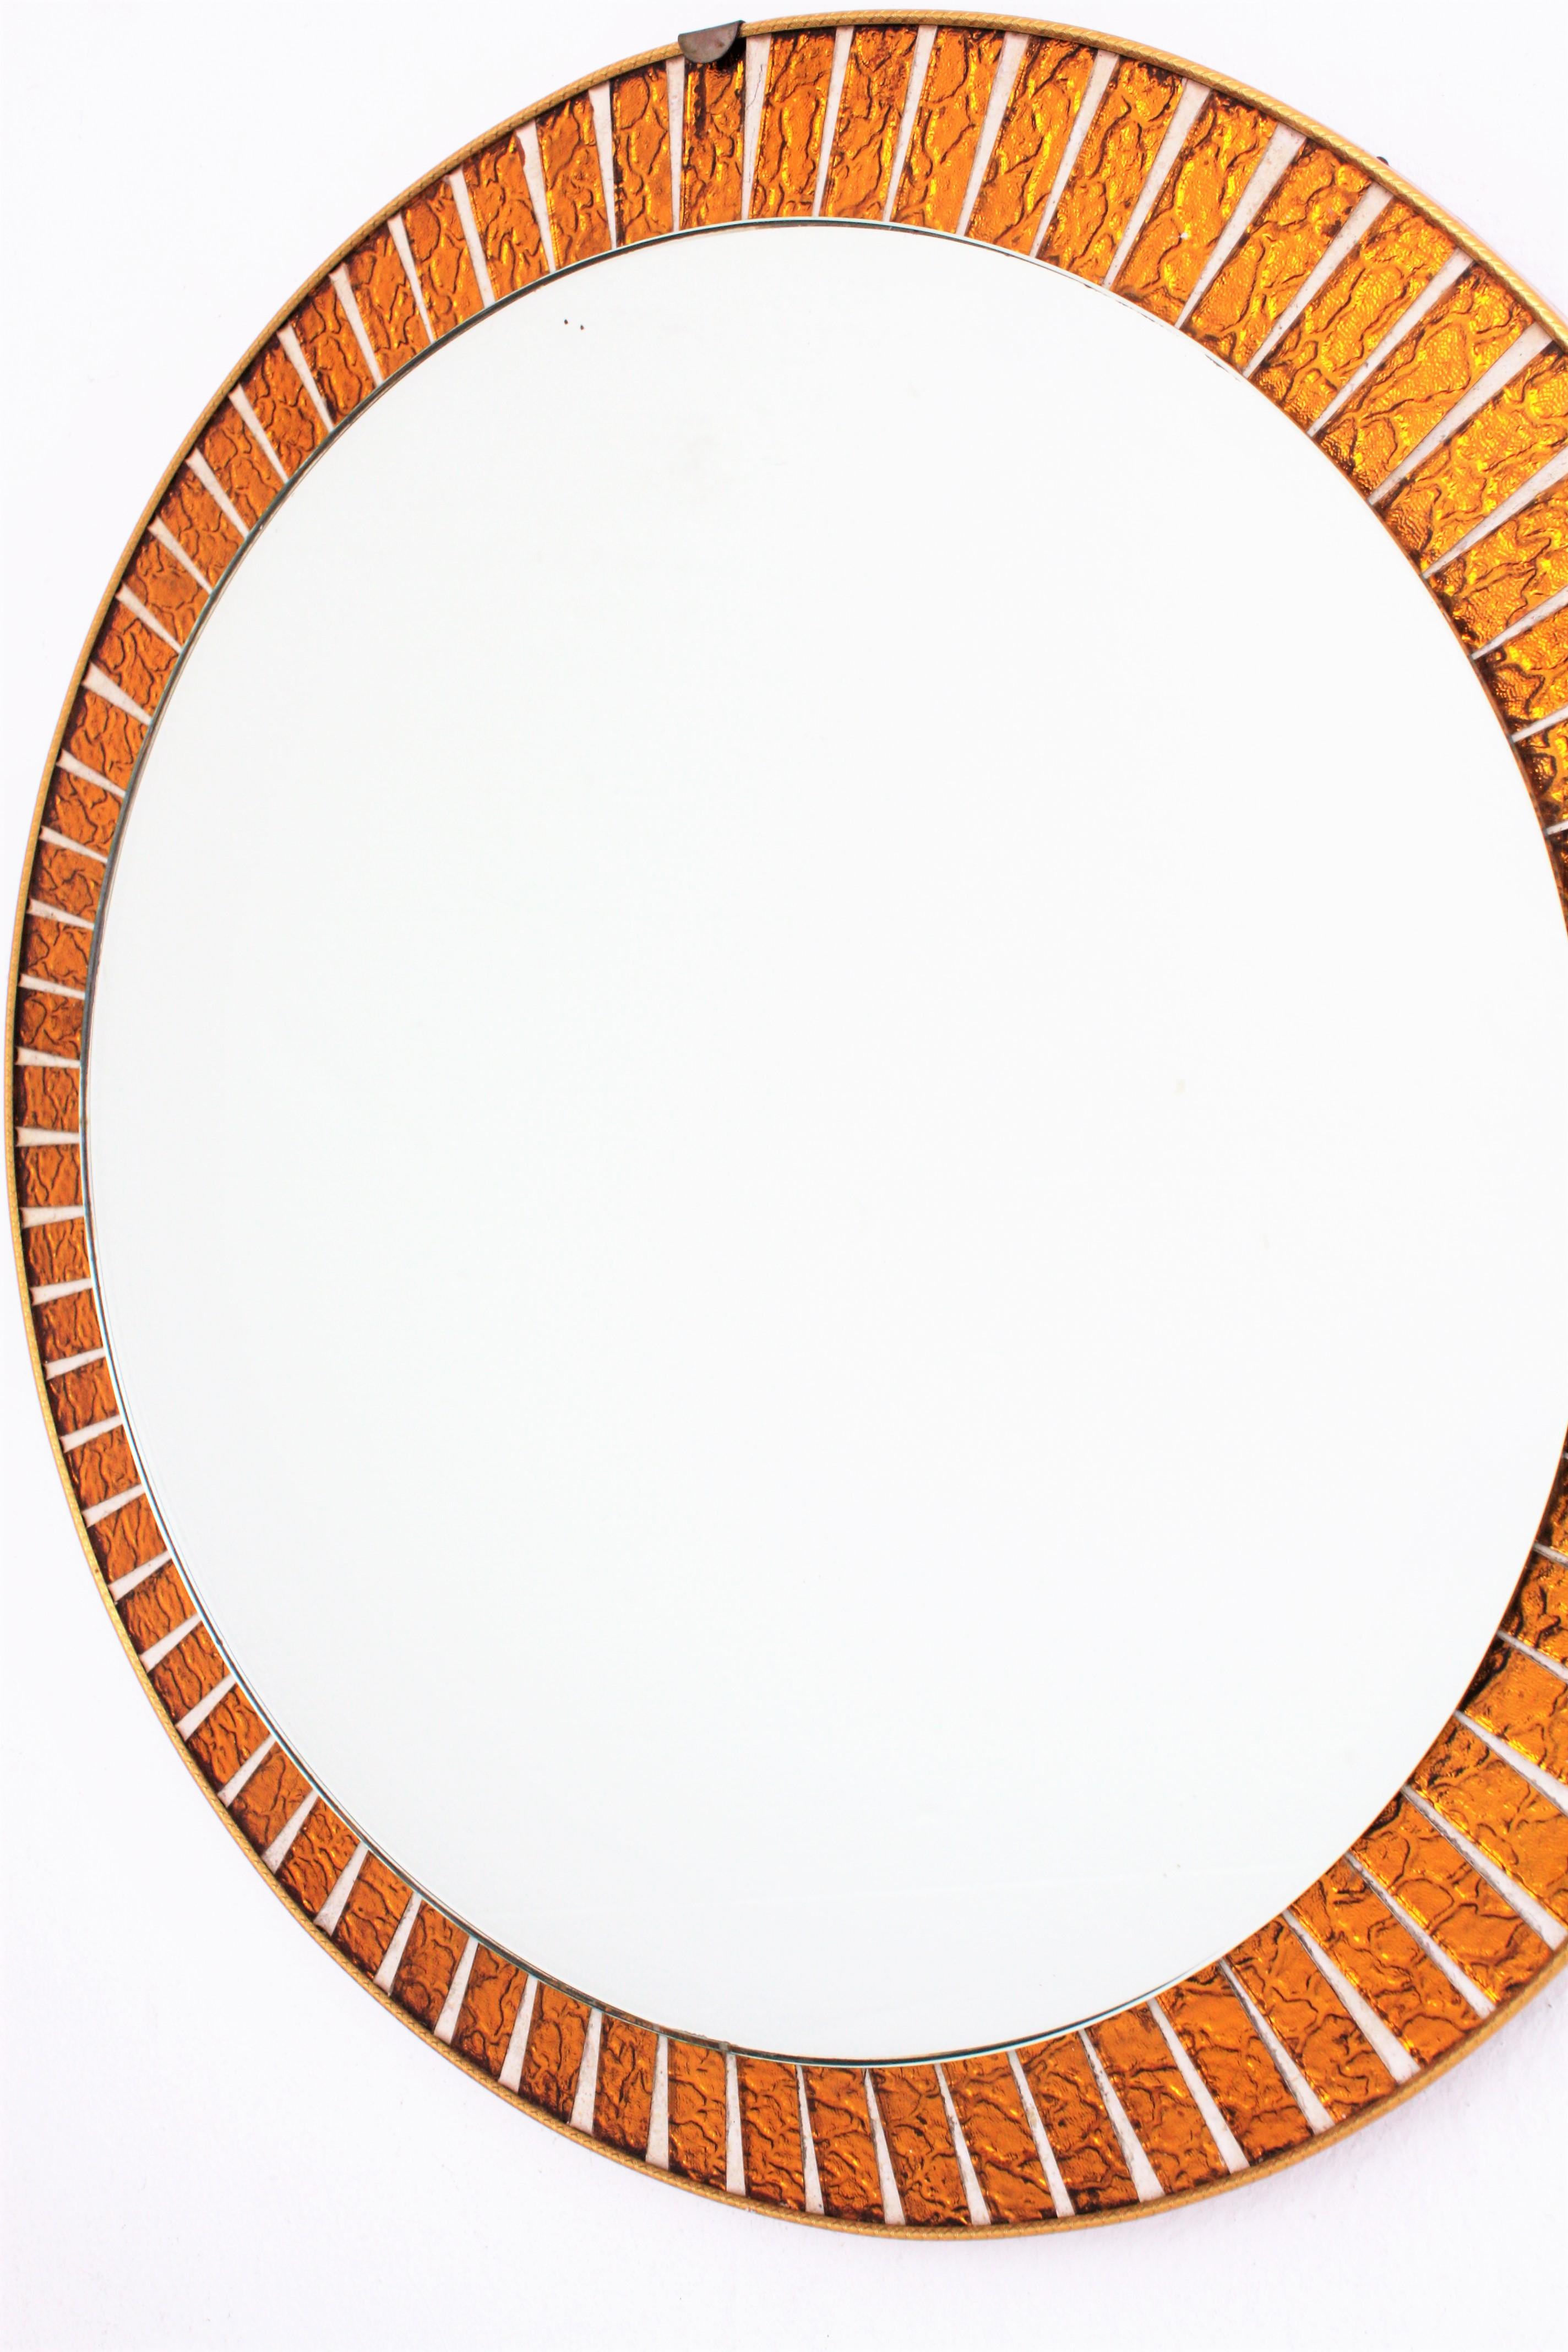 Spanish Midcentury Round Sunburst Mirror with Orange Glass Mosaic Frame For Sale